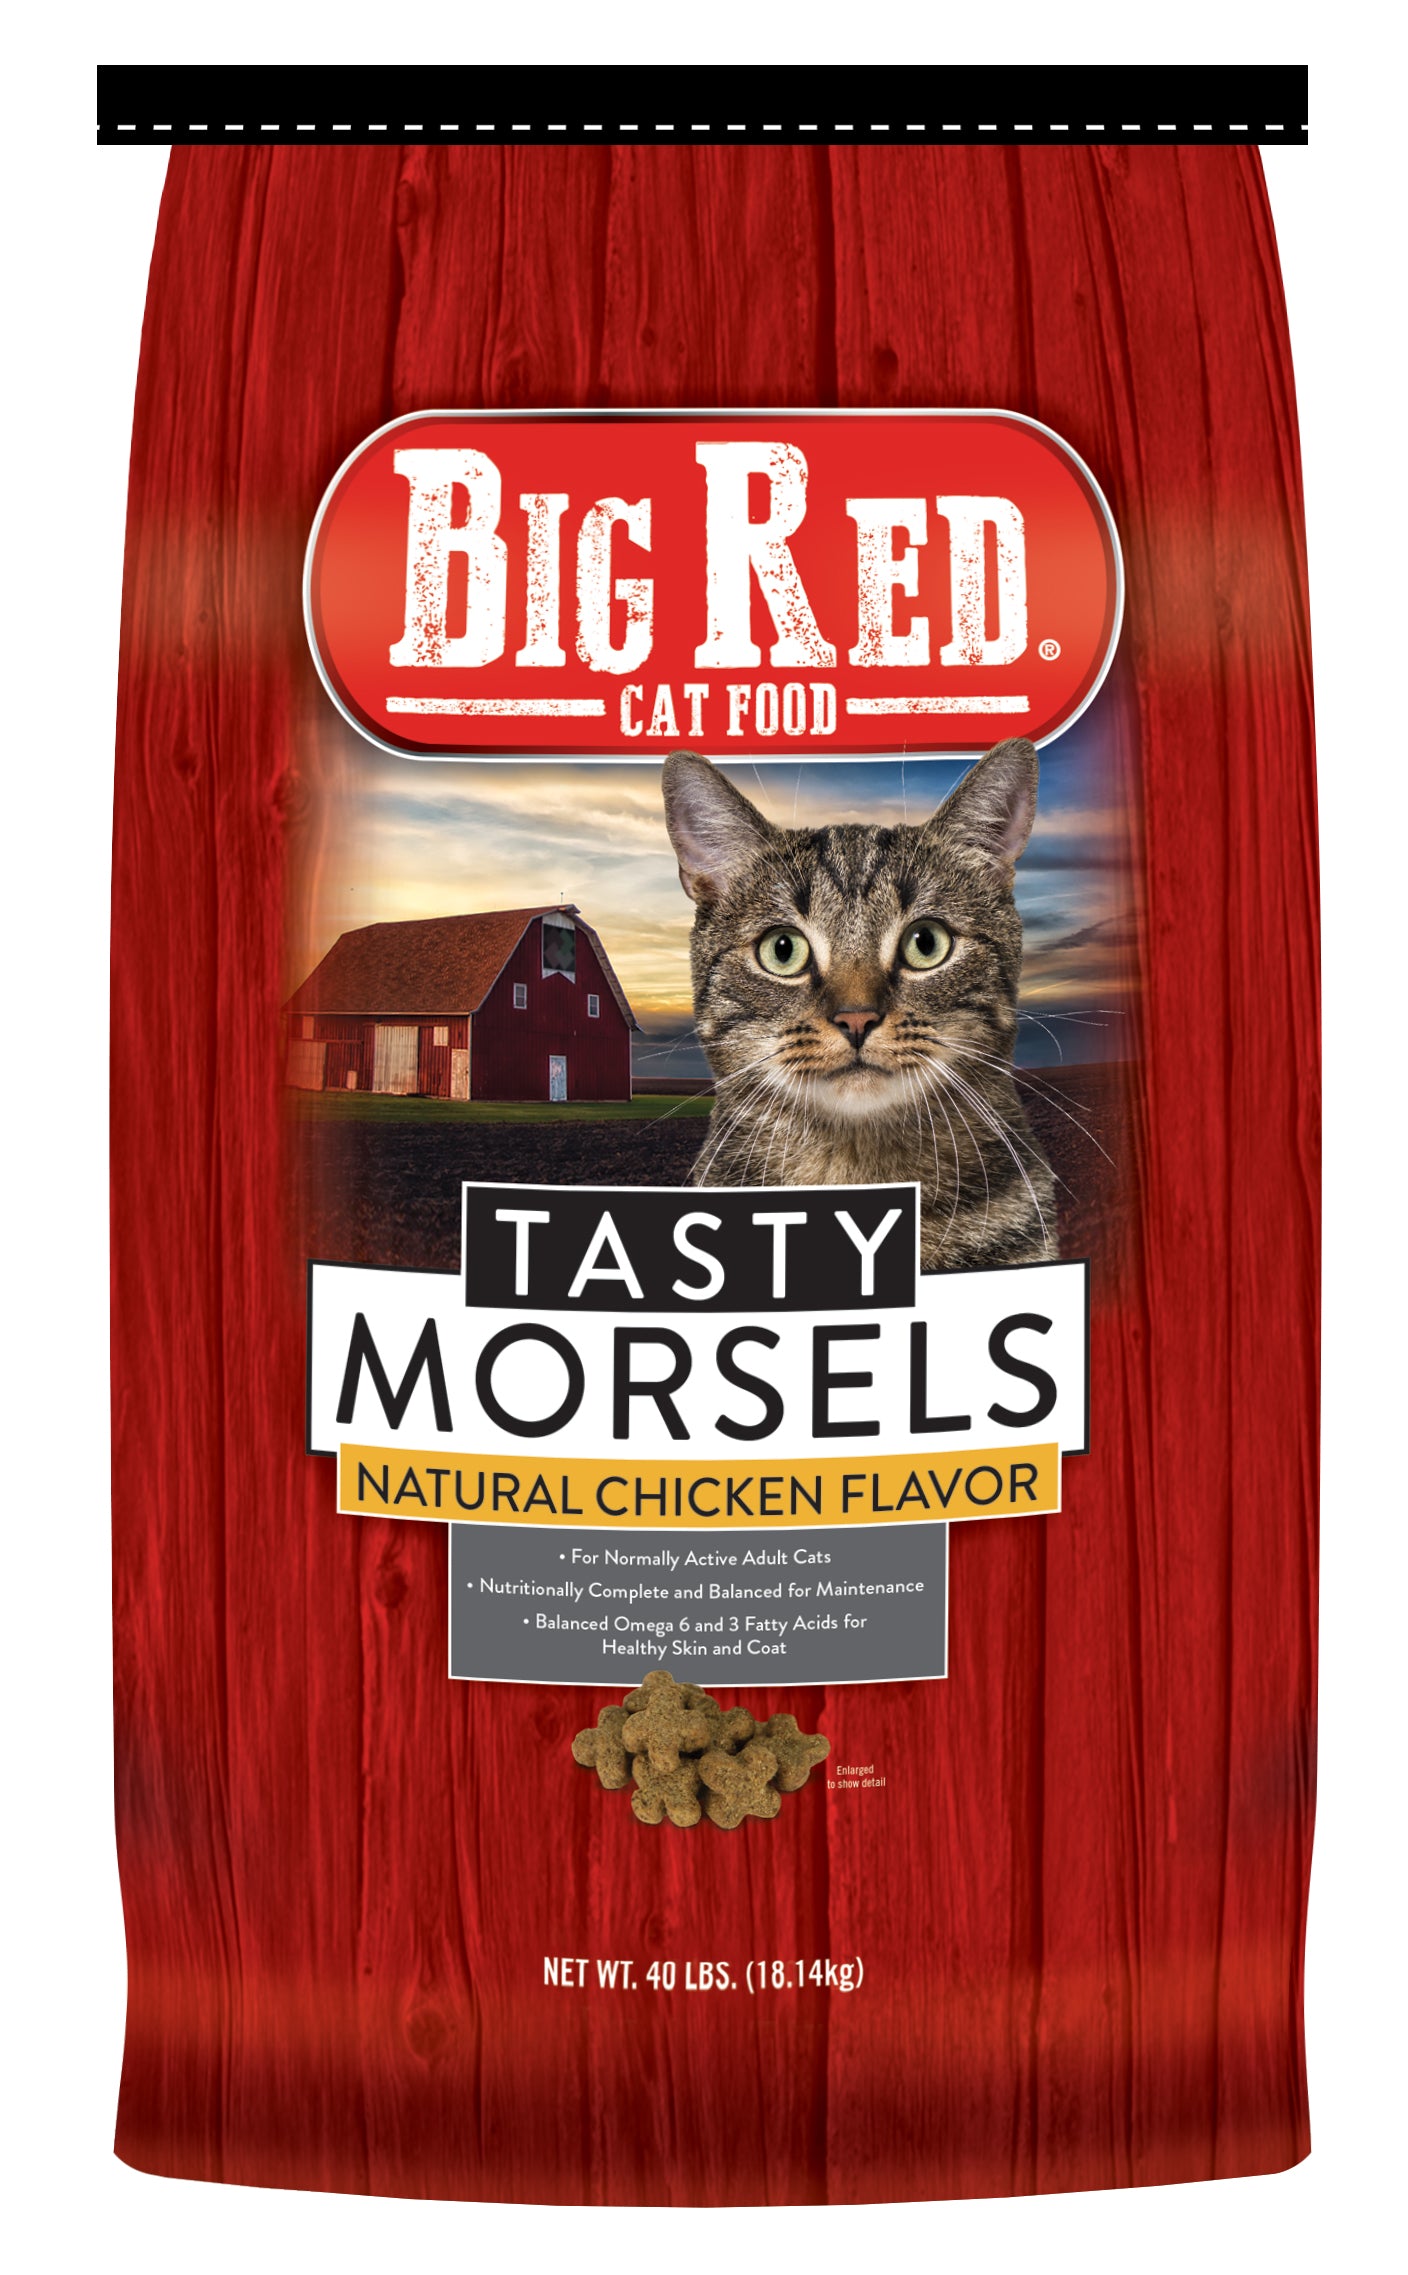 Big Red Tasty Morsels Cat Food